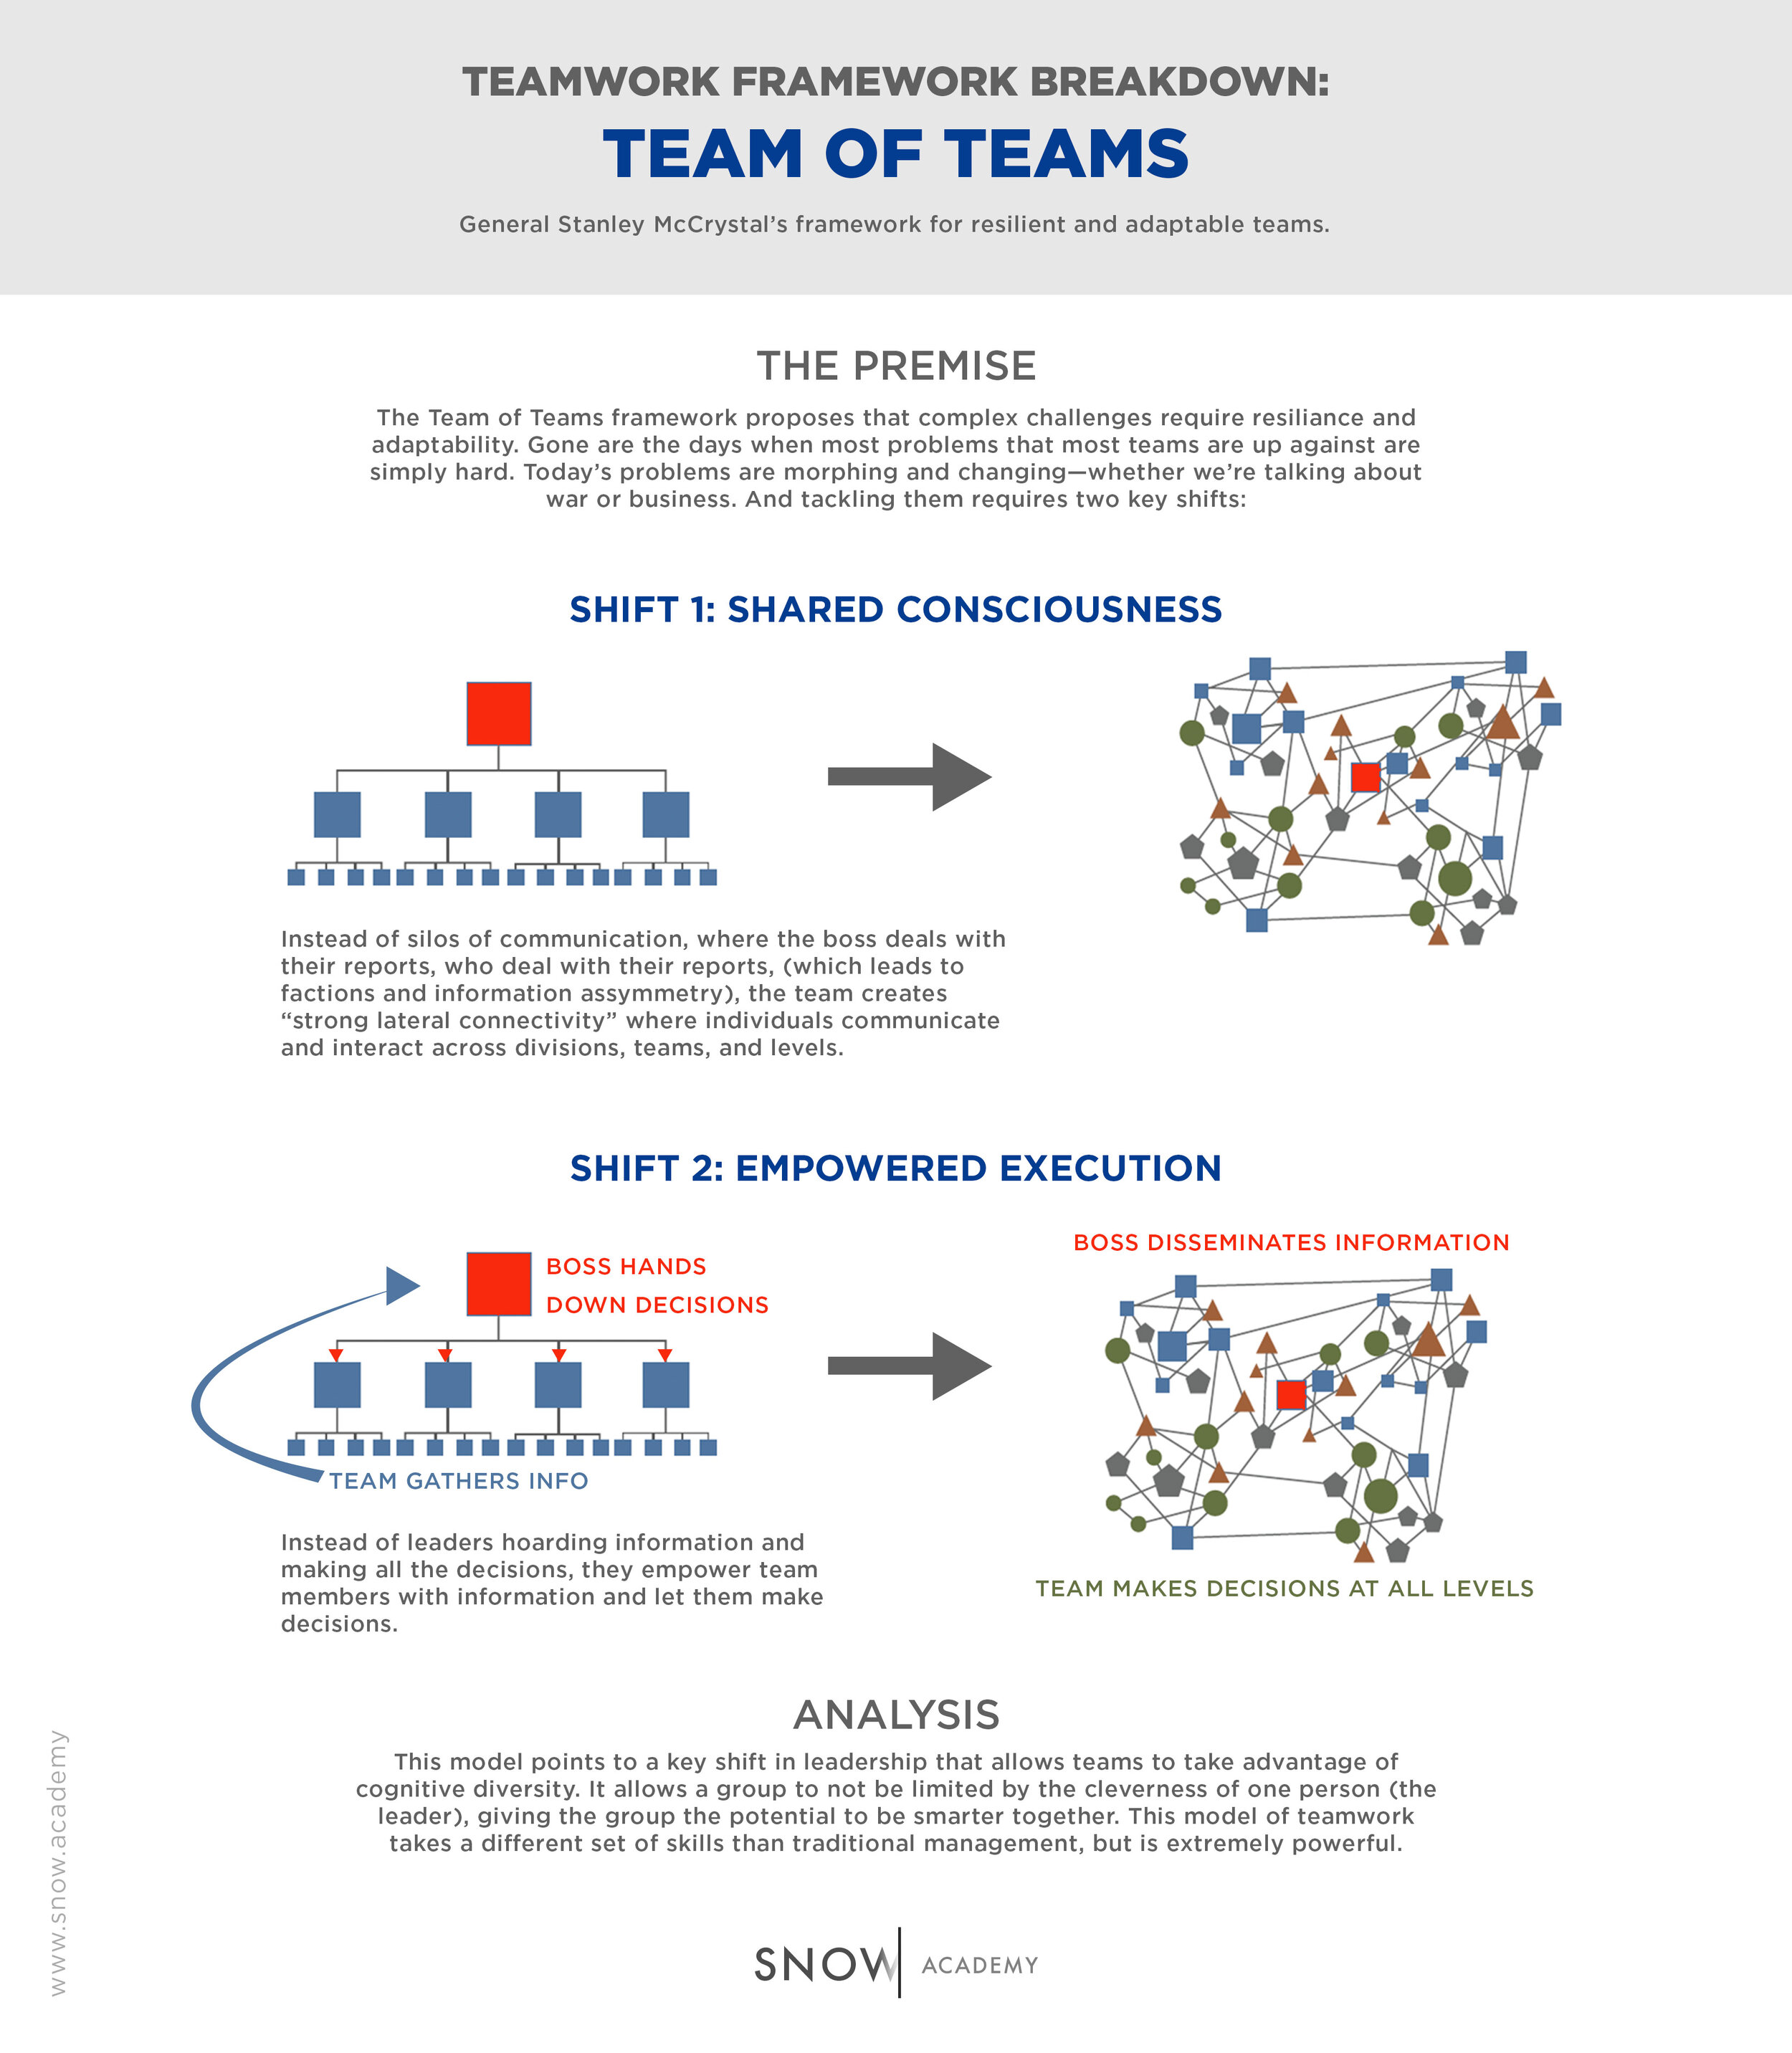 The Team of Teams Framework